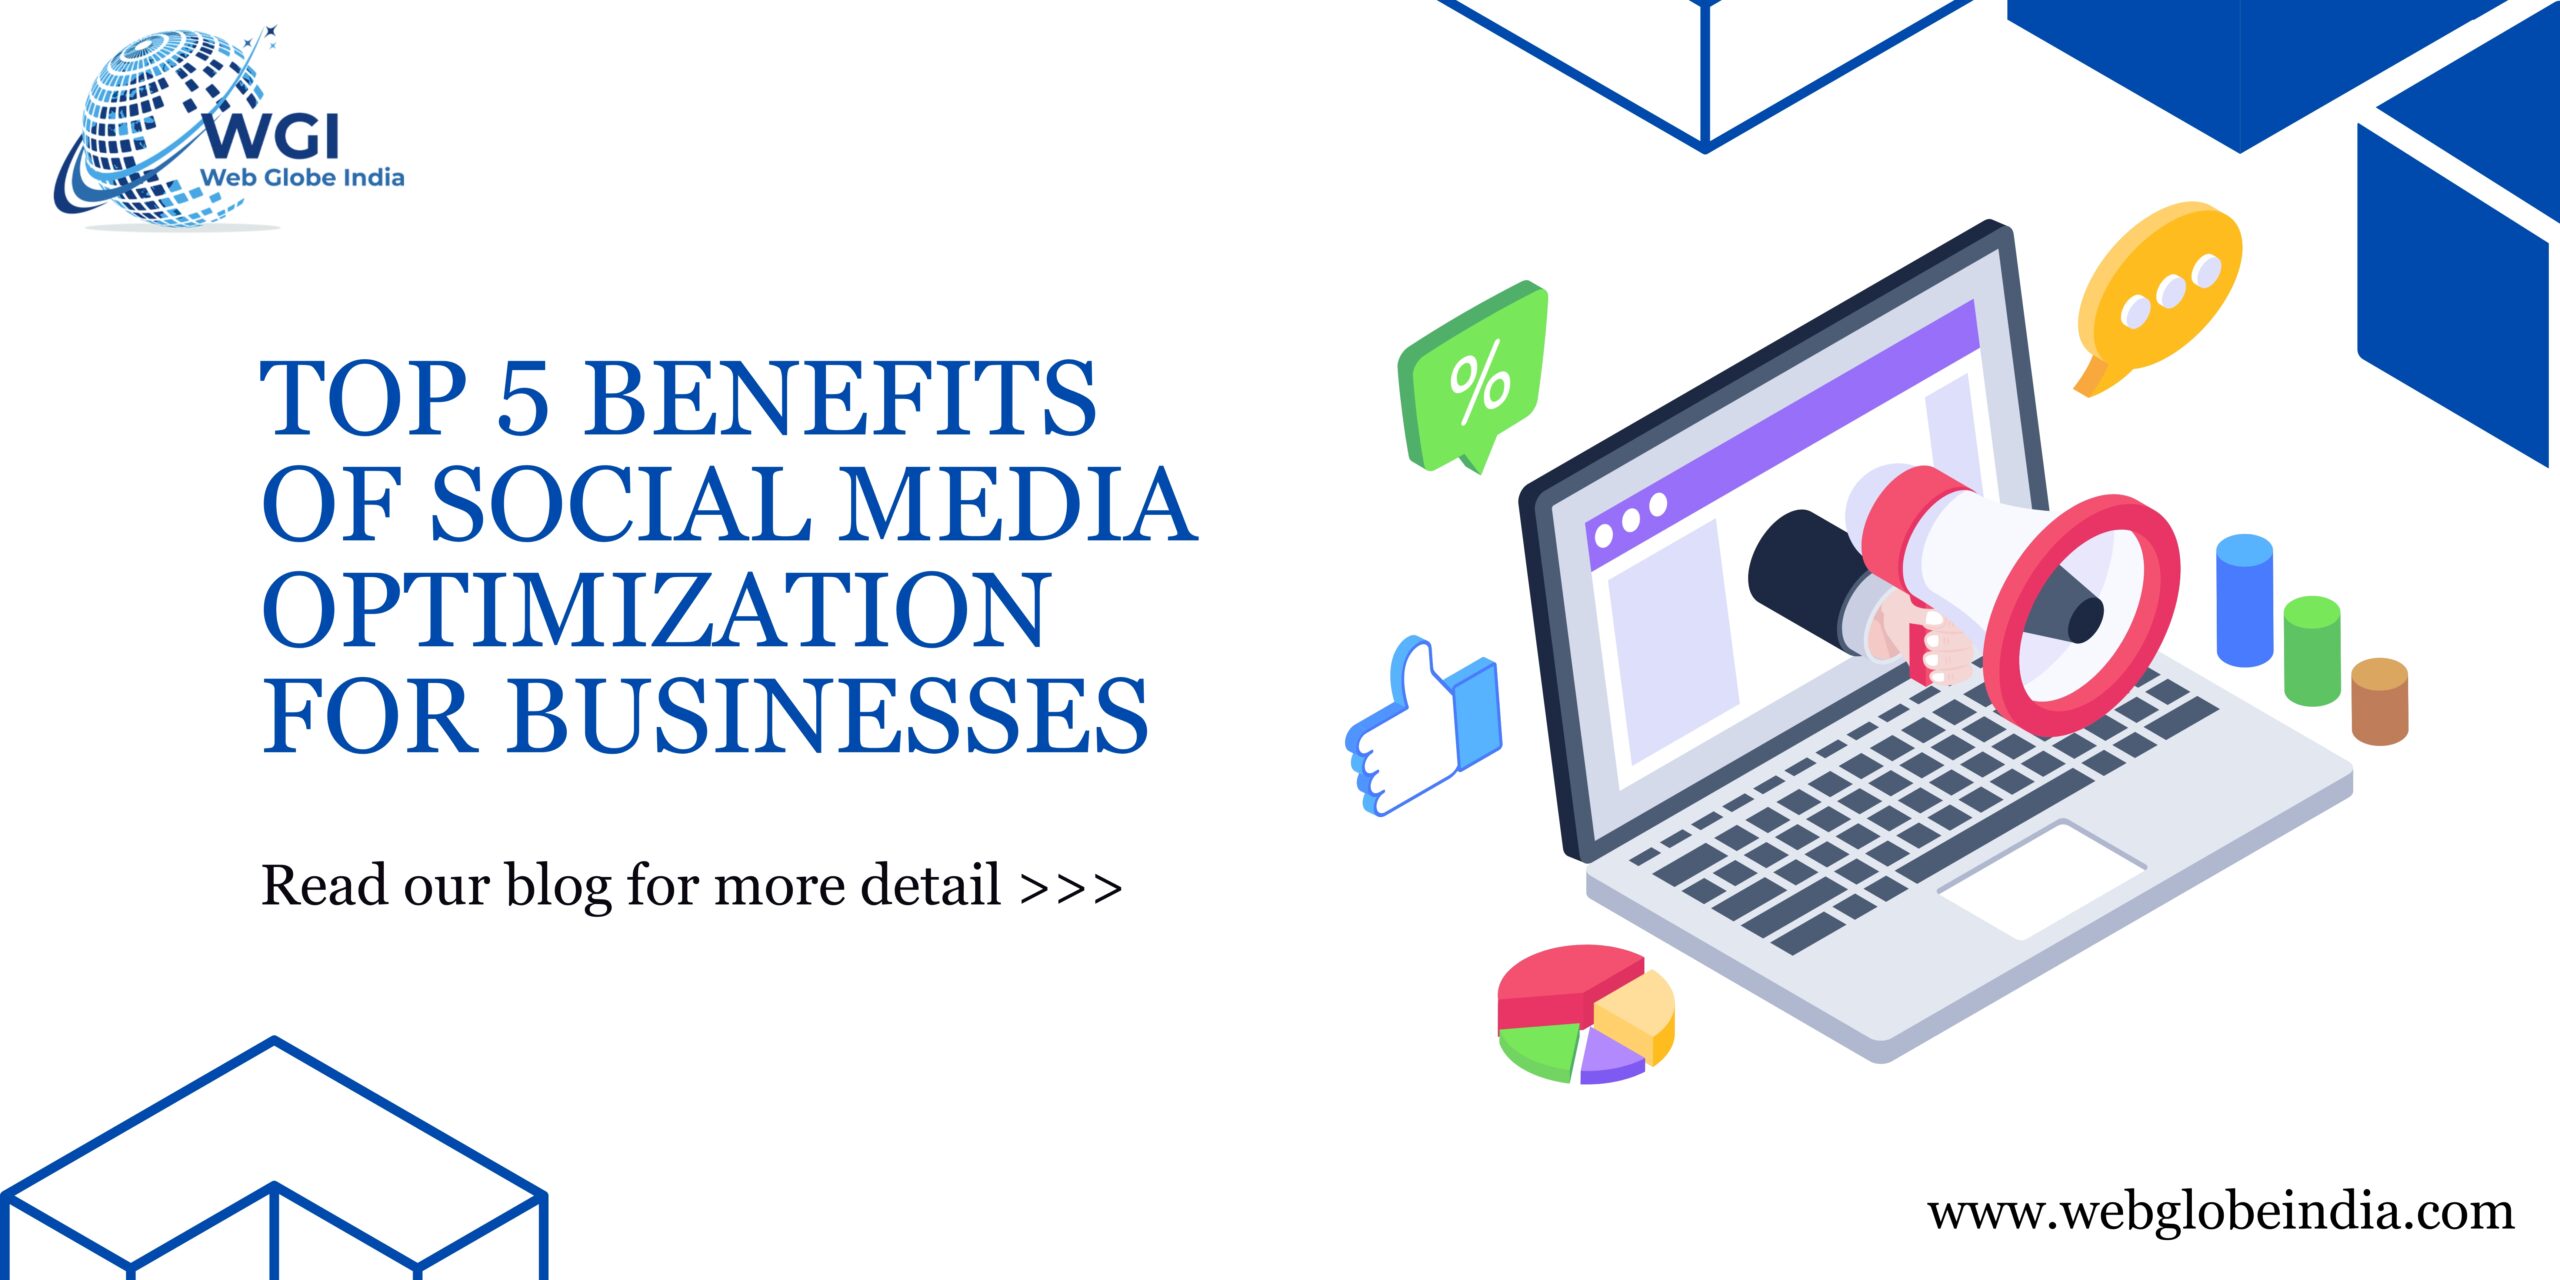 Top 5 benefits of social media optimization for businesses